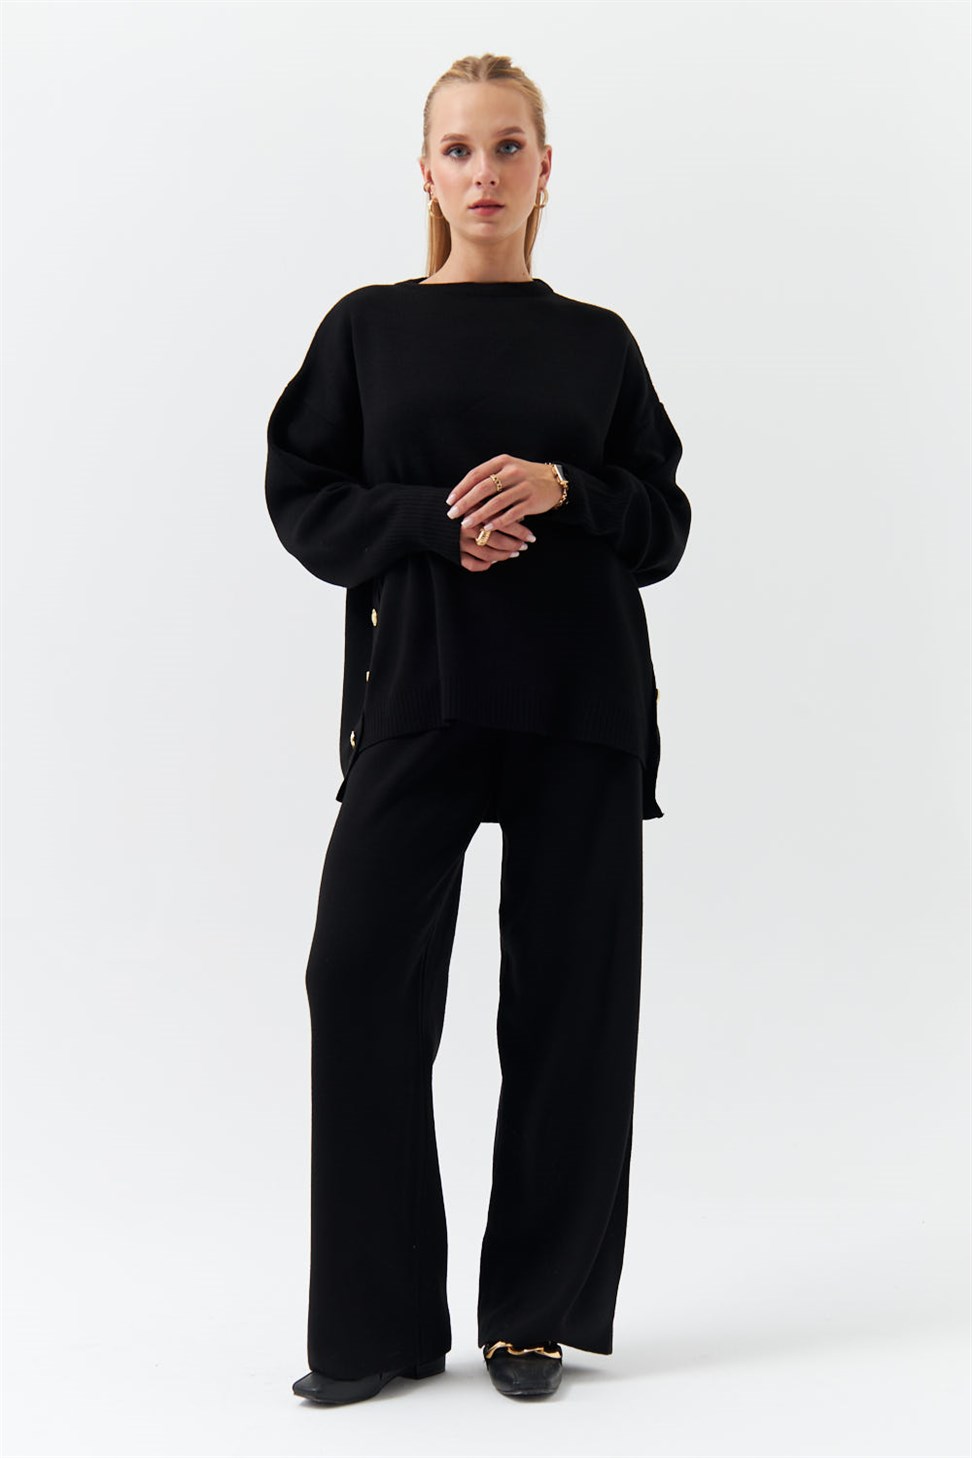 Slit Detailed Knitwear Black Womens Suit